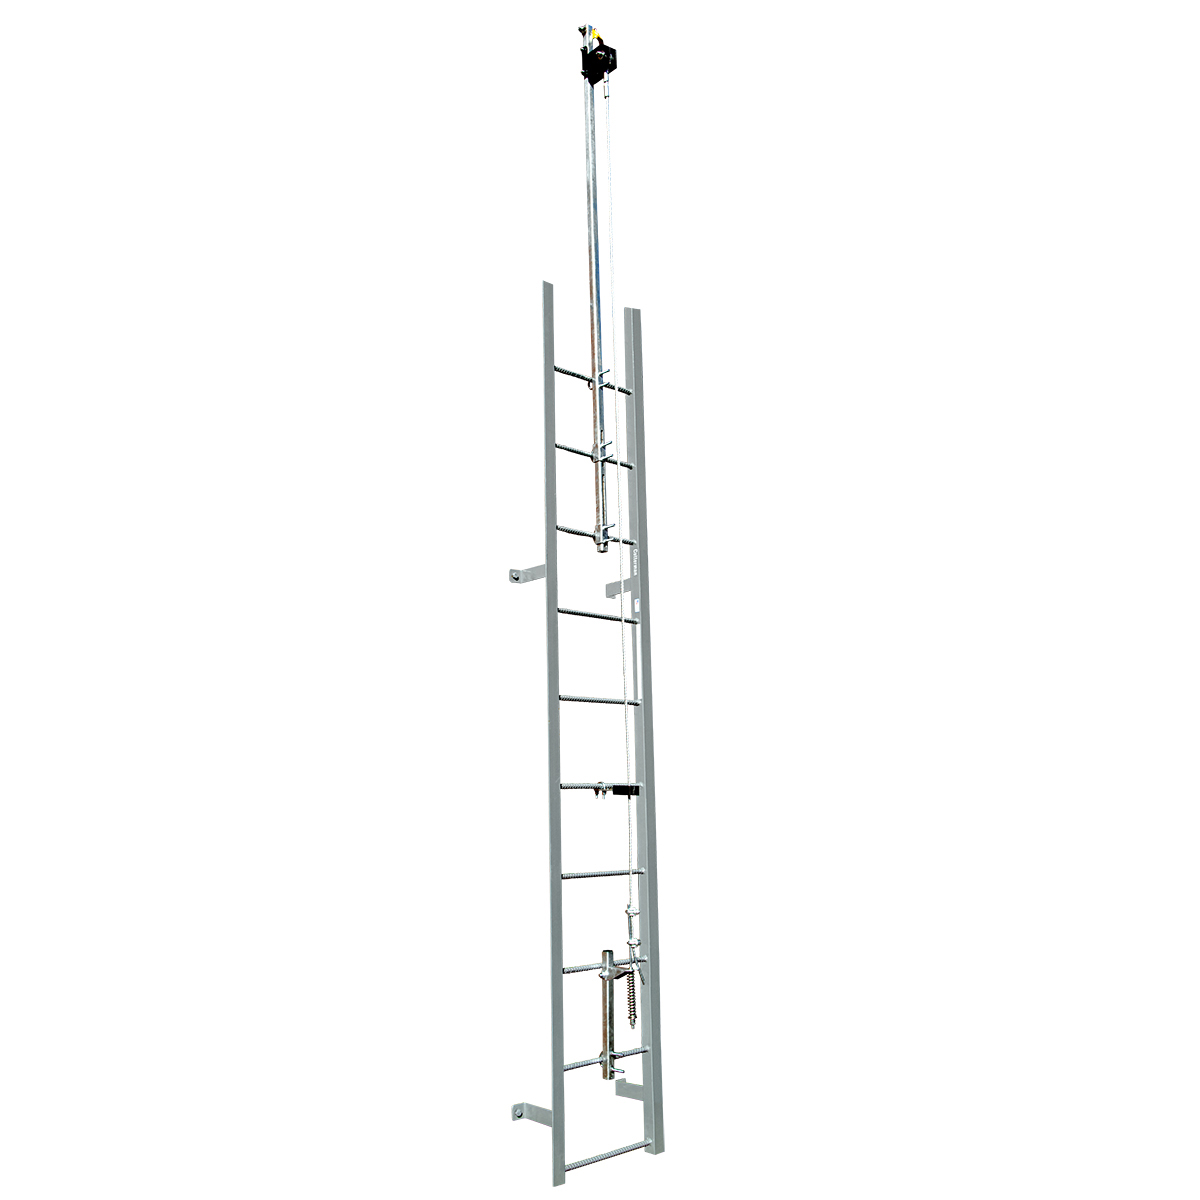 SafeWaze 30' VLL Cable Ladder System w/Extended Top Bracket, 2-person Complete Kit